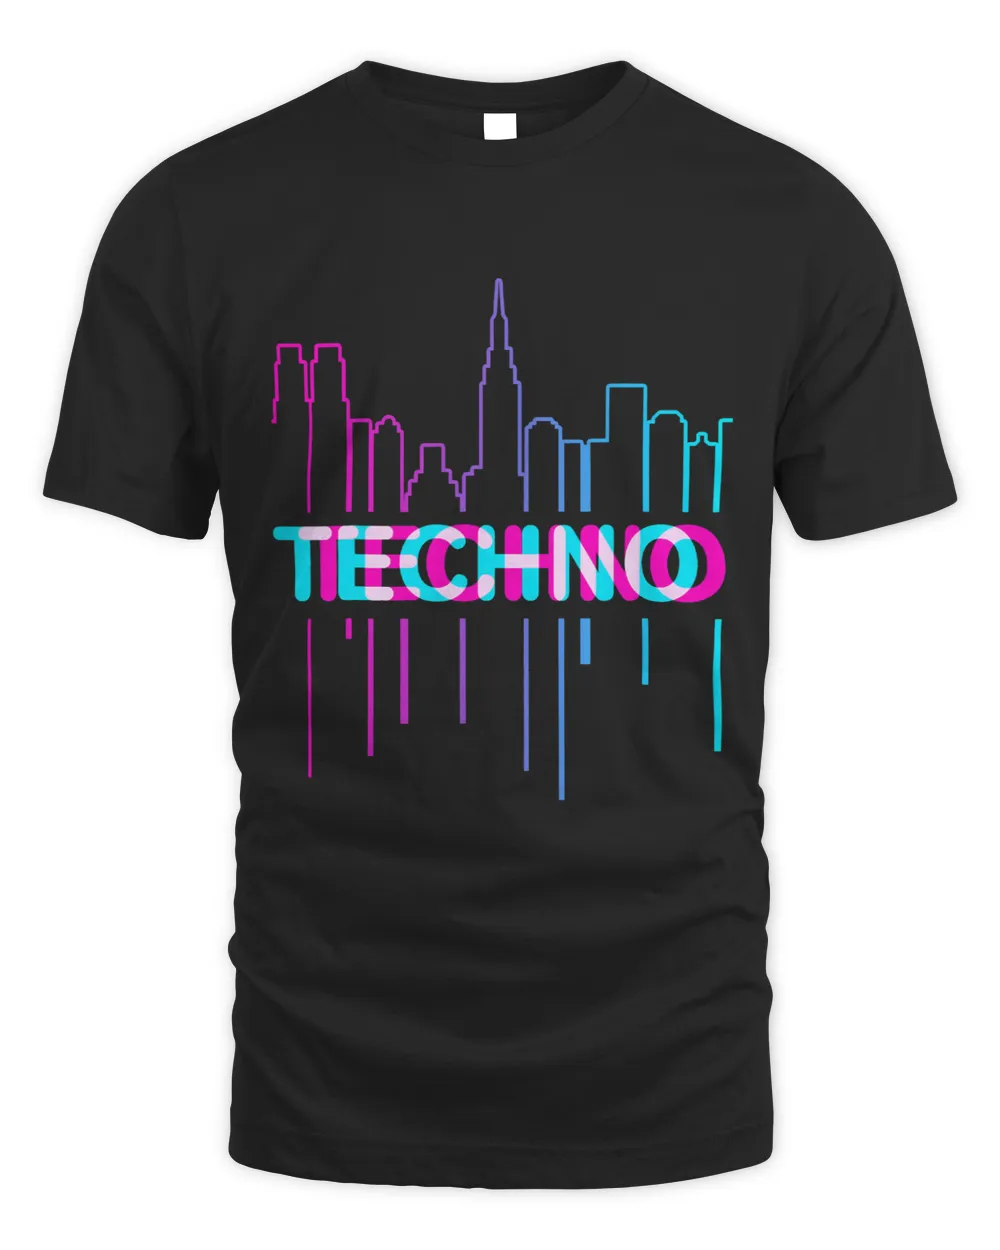 City techno electronic music